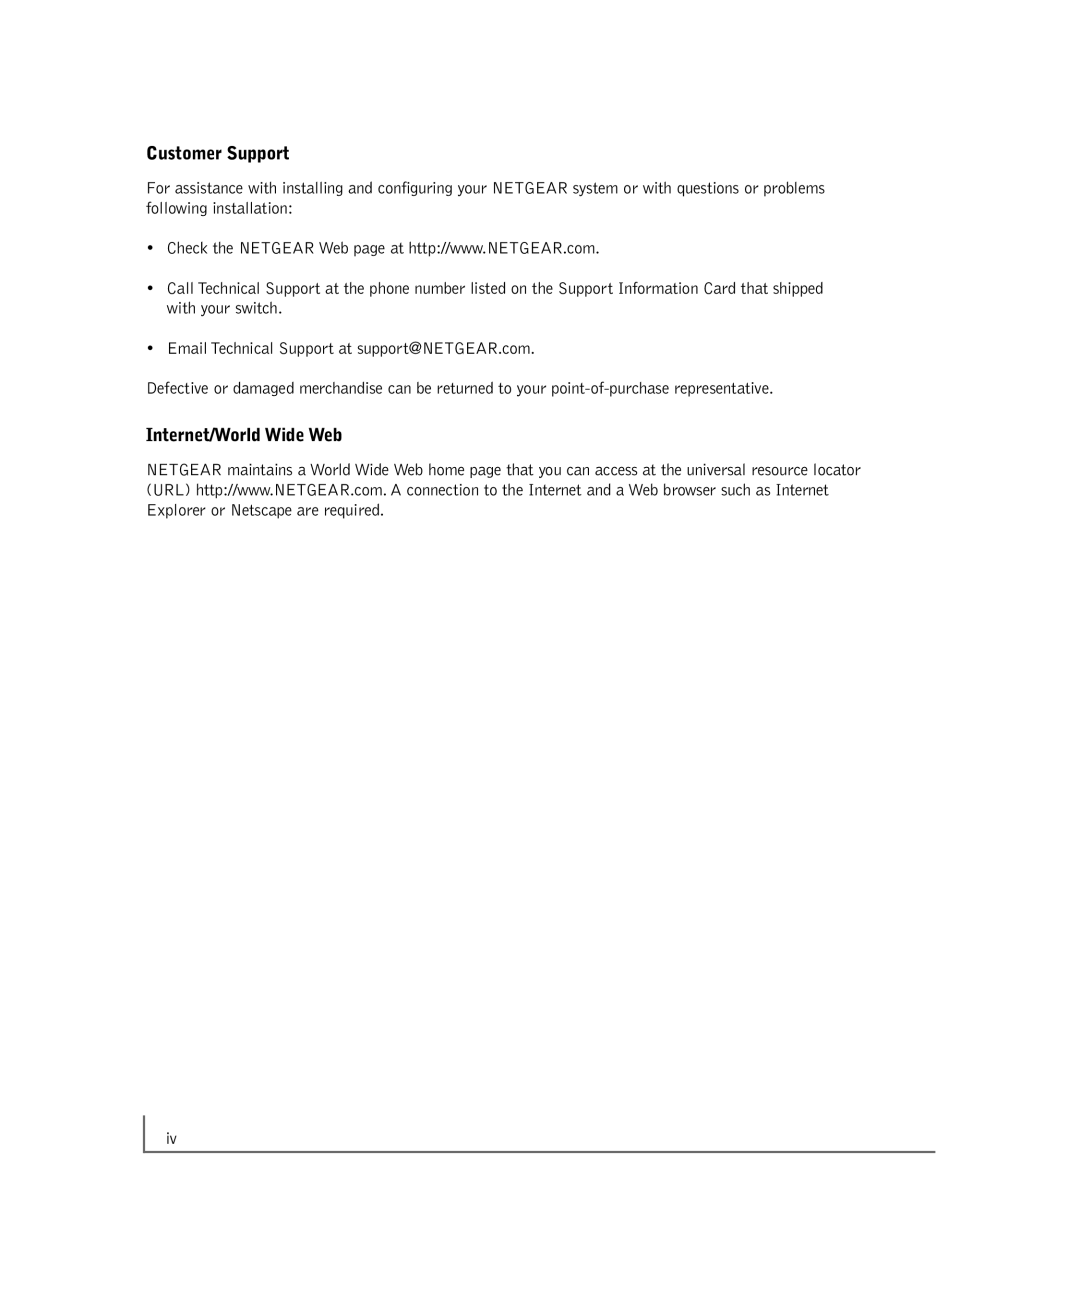 NETGEAR GA302T manual Customer Support, Internet/World Wide Web 